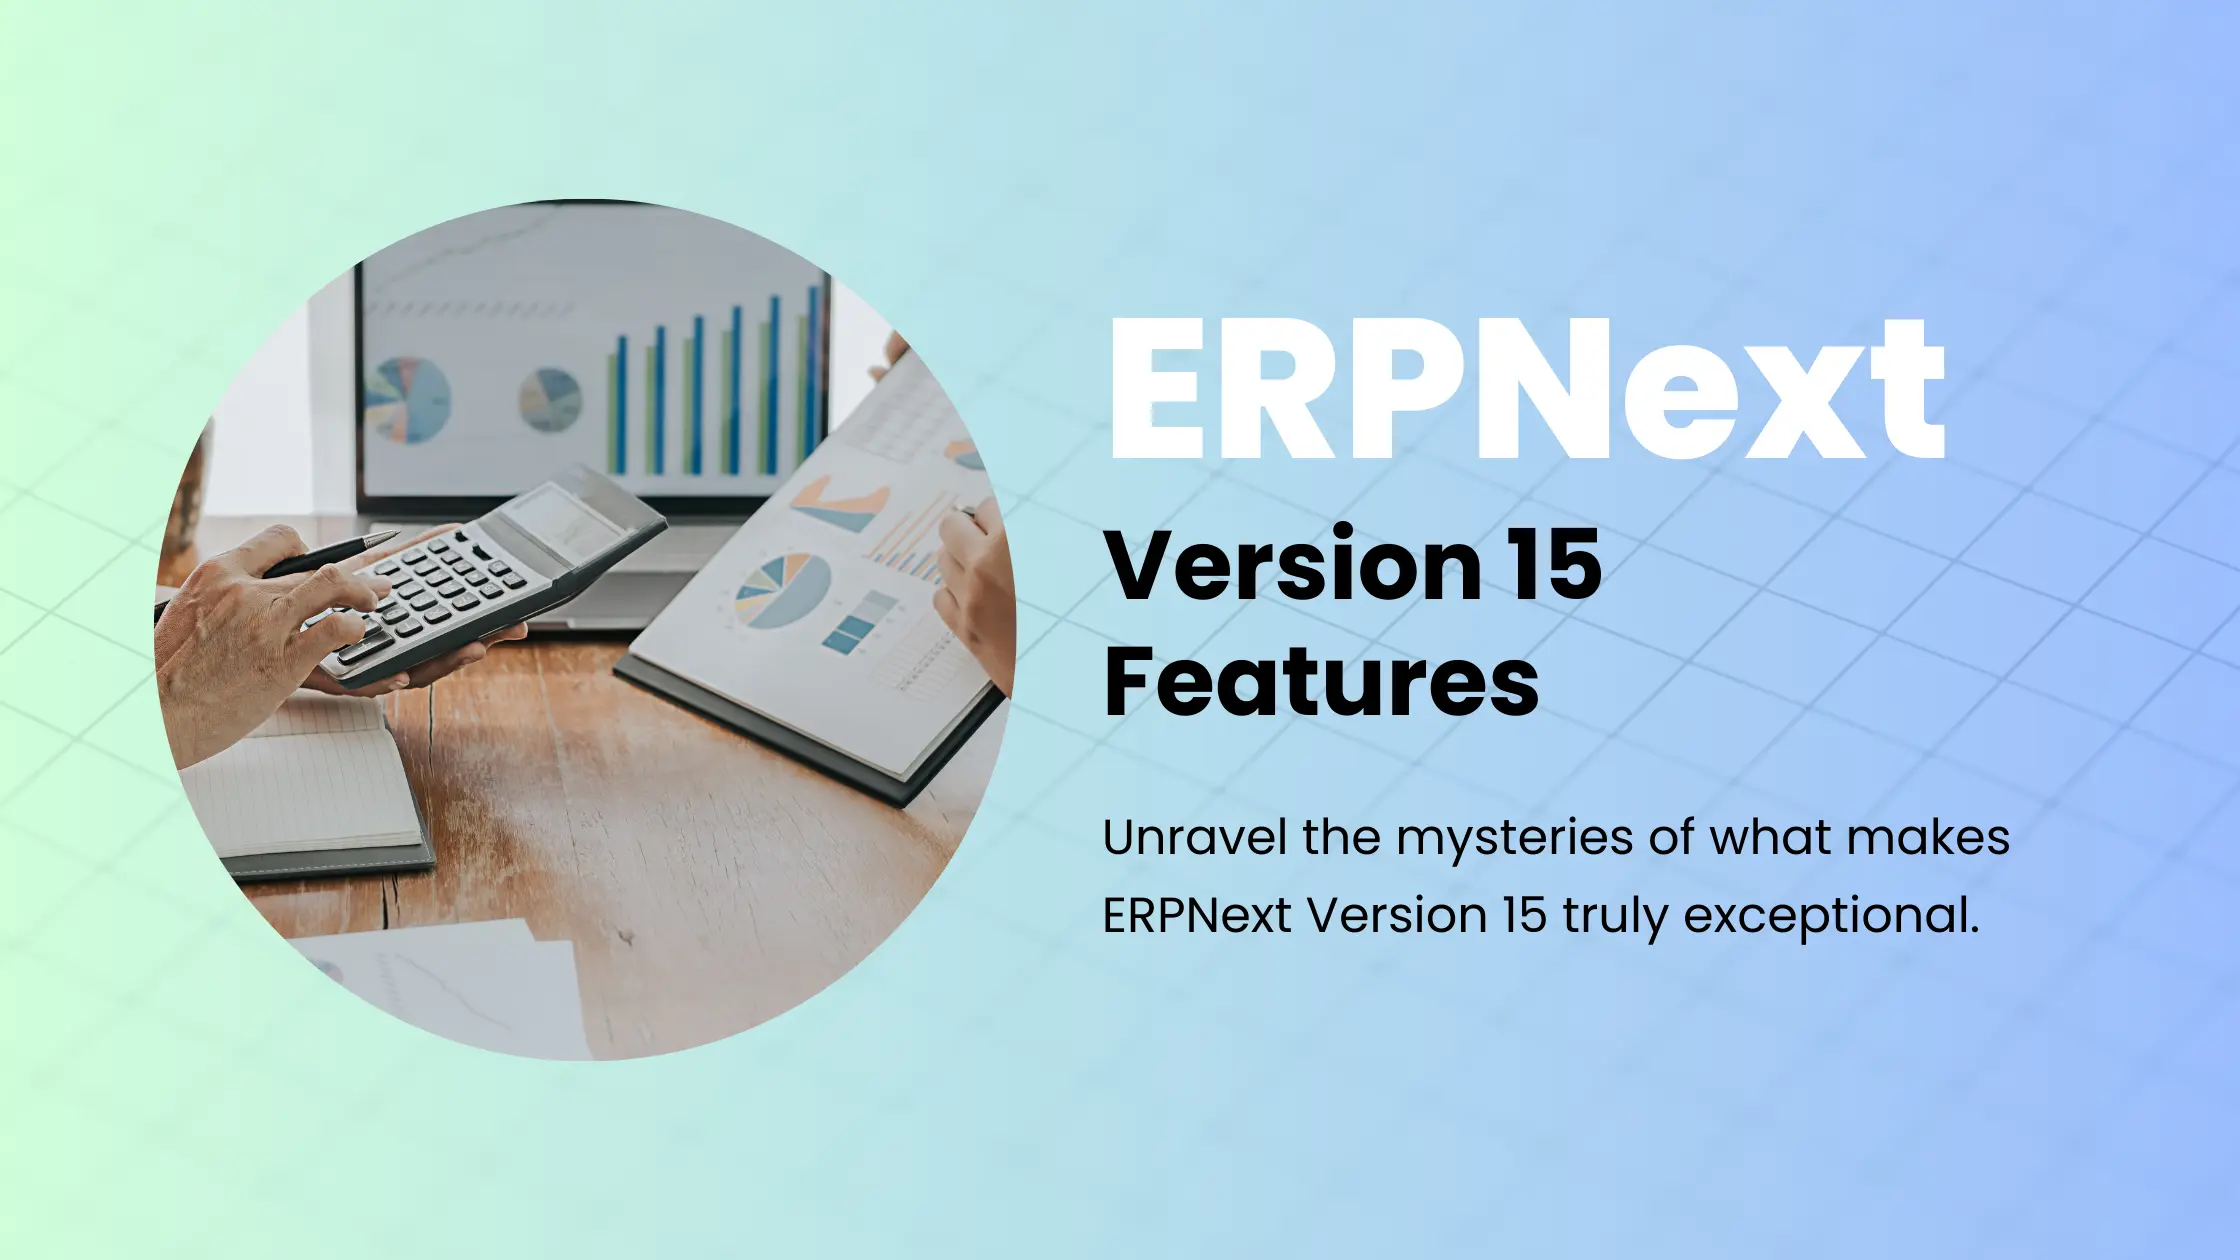 ERPNext version 15 features